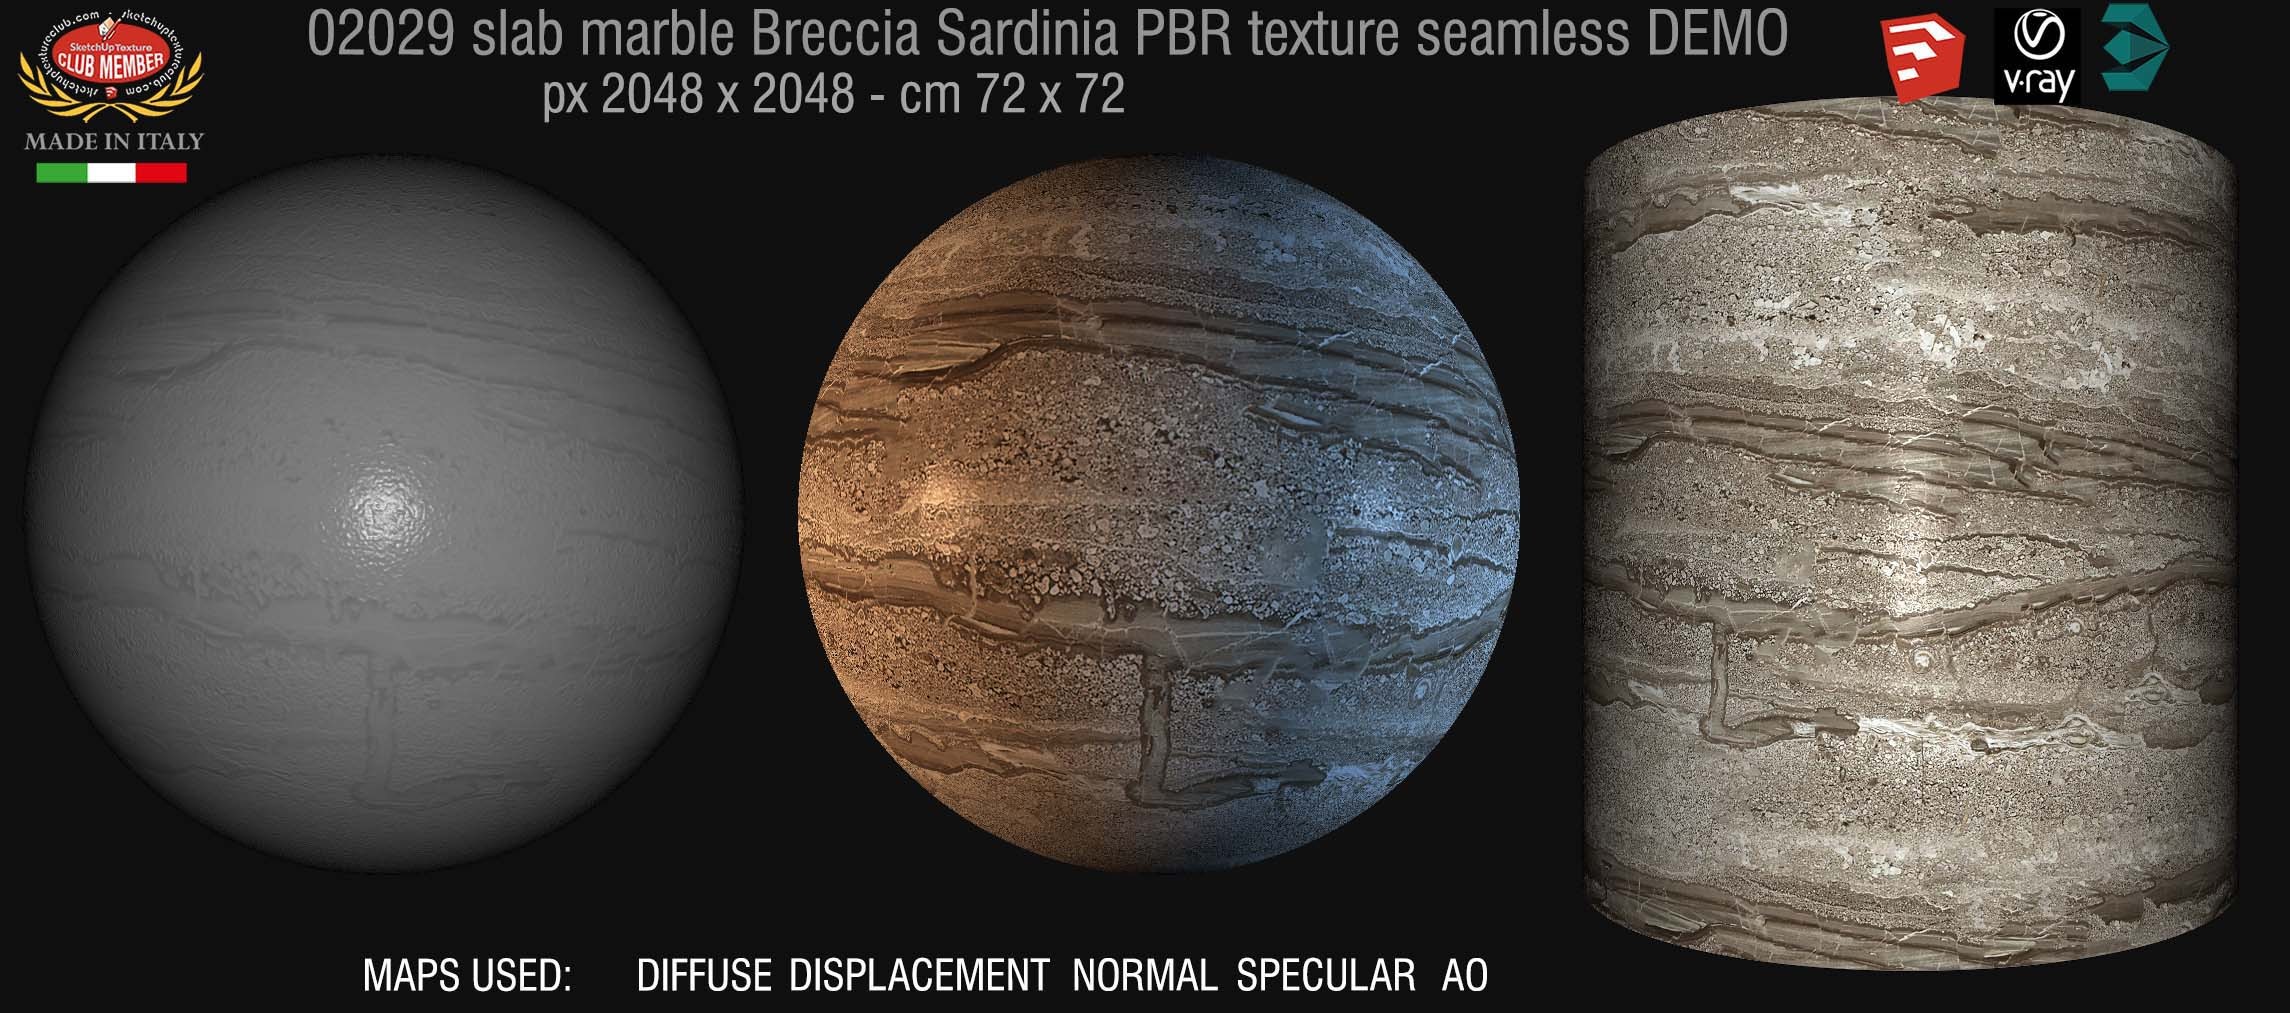 02029 Slab marble breccia sardinia PBR texture seamless DEMO